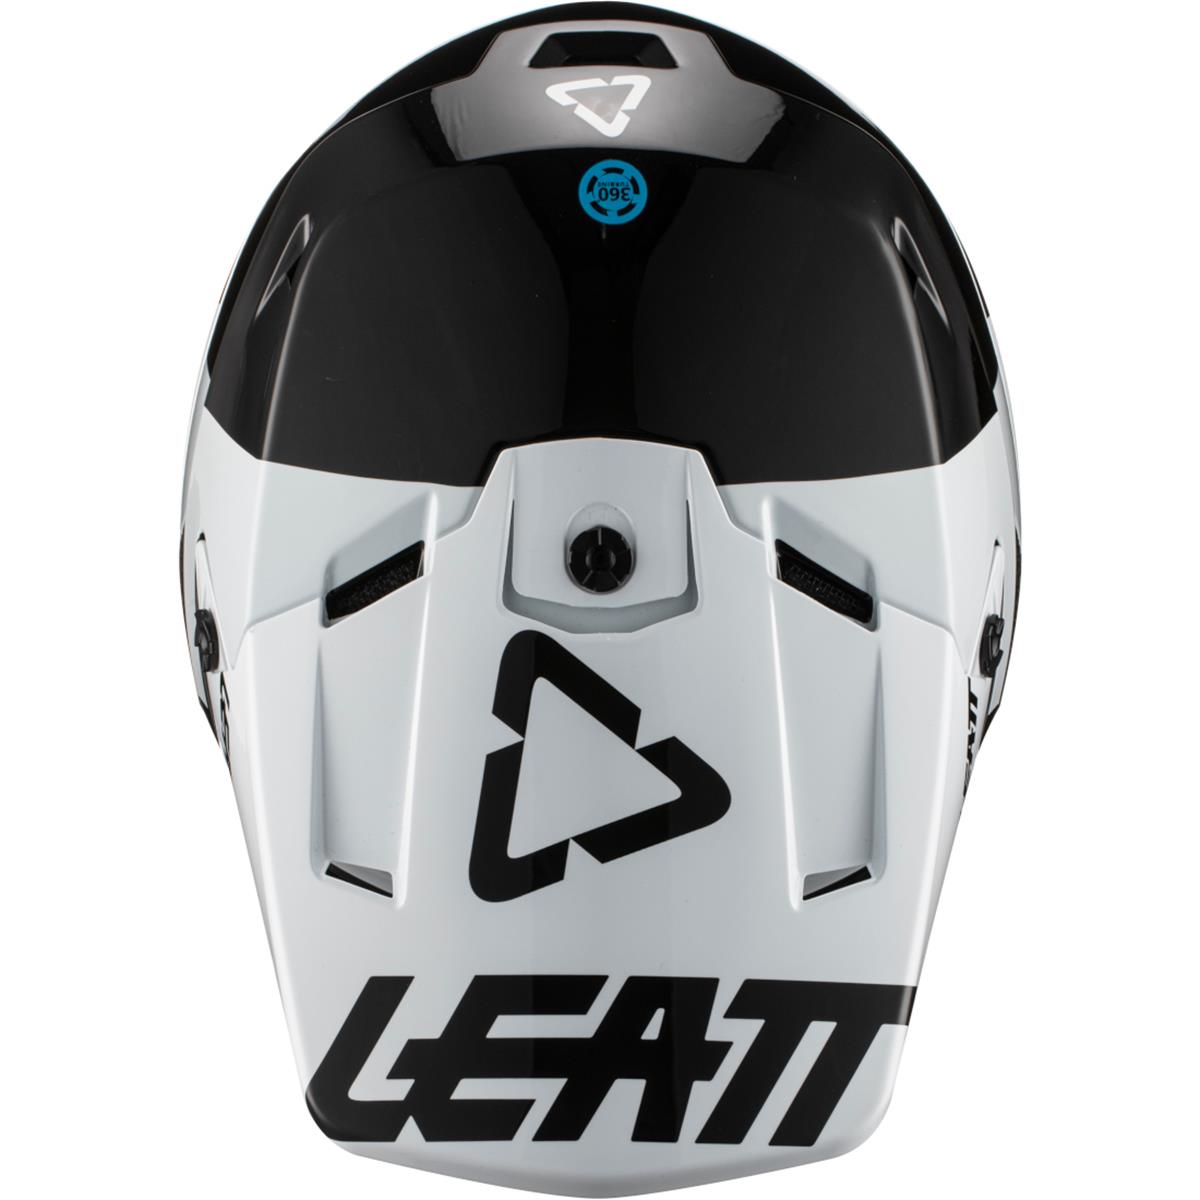 Casco cross bambino Leatt GPX 3.5 junior minicross - Mxlife offerta casco  helmet Leatt